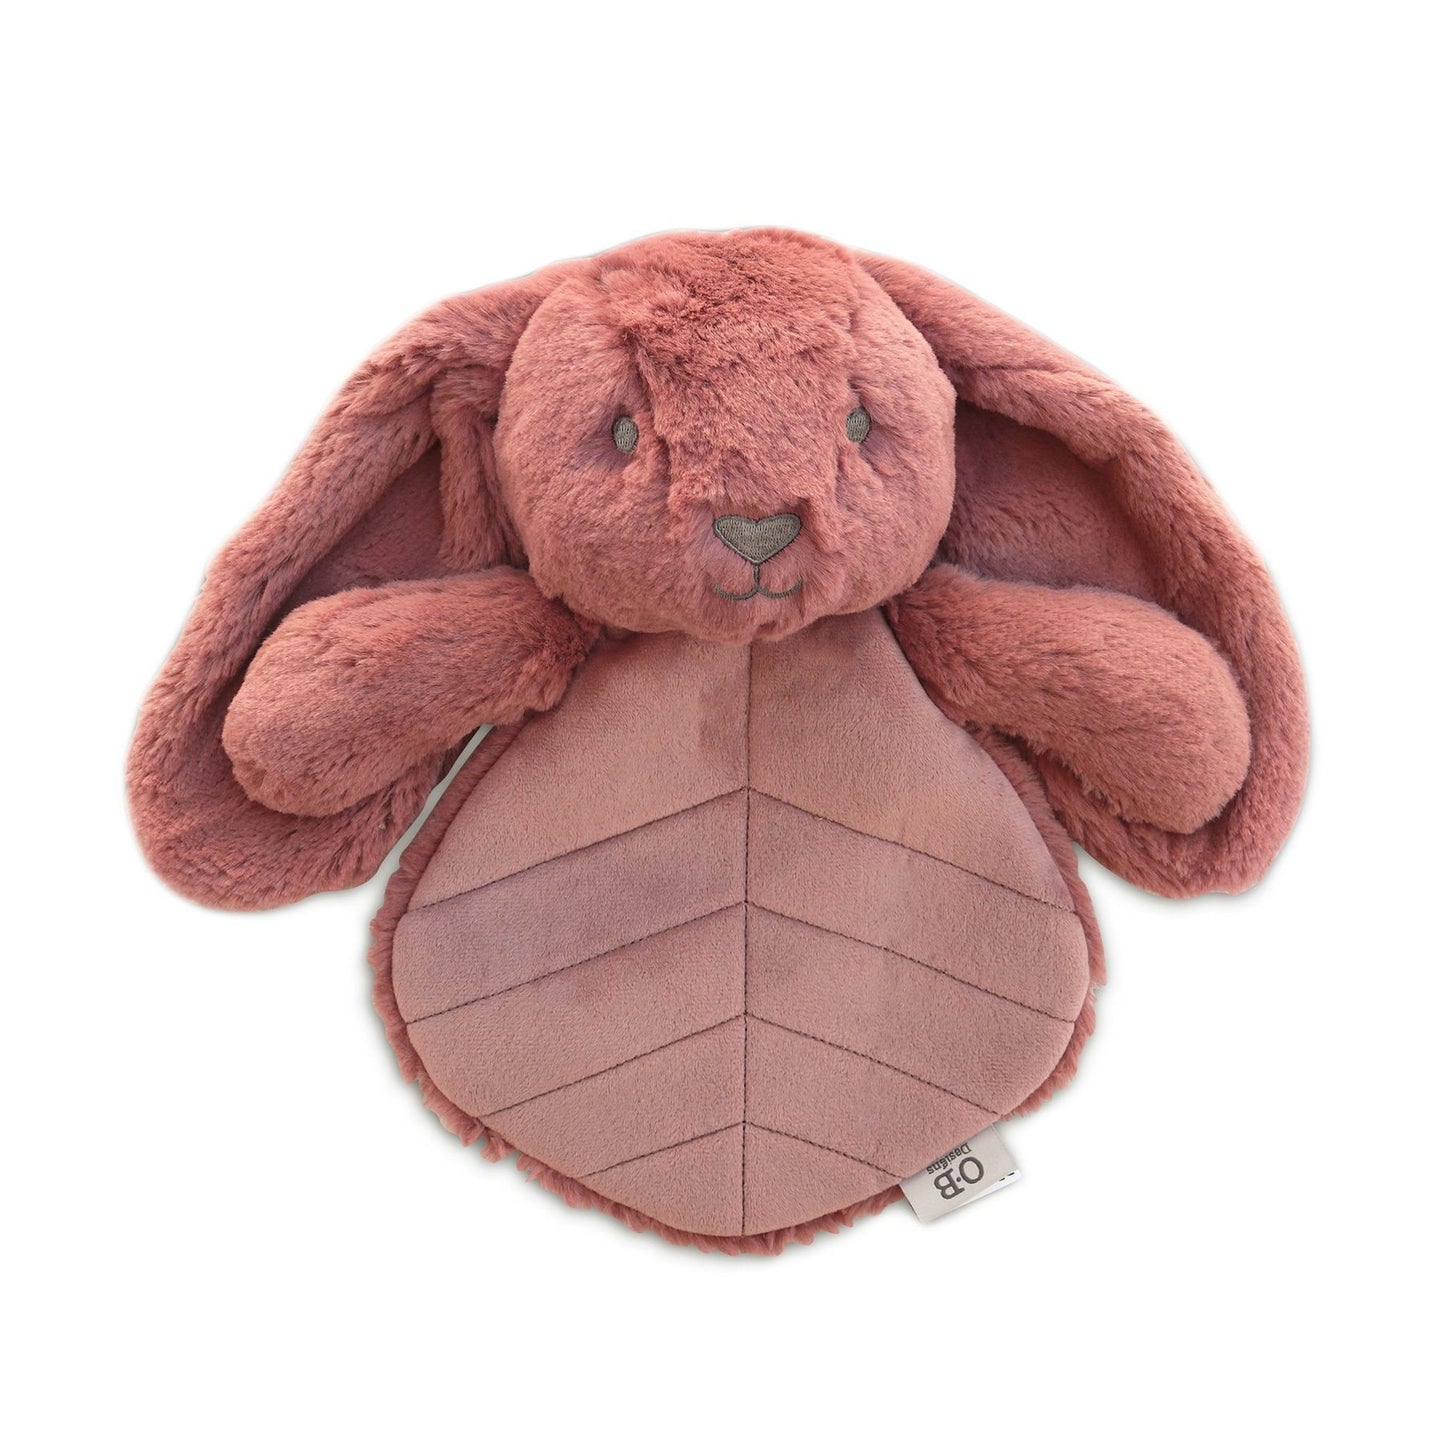 OB Designs Bella Bunny Comforter